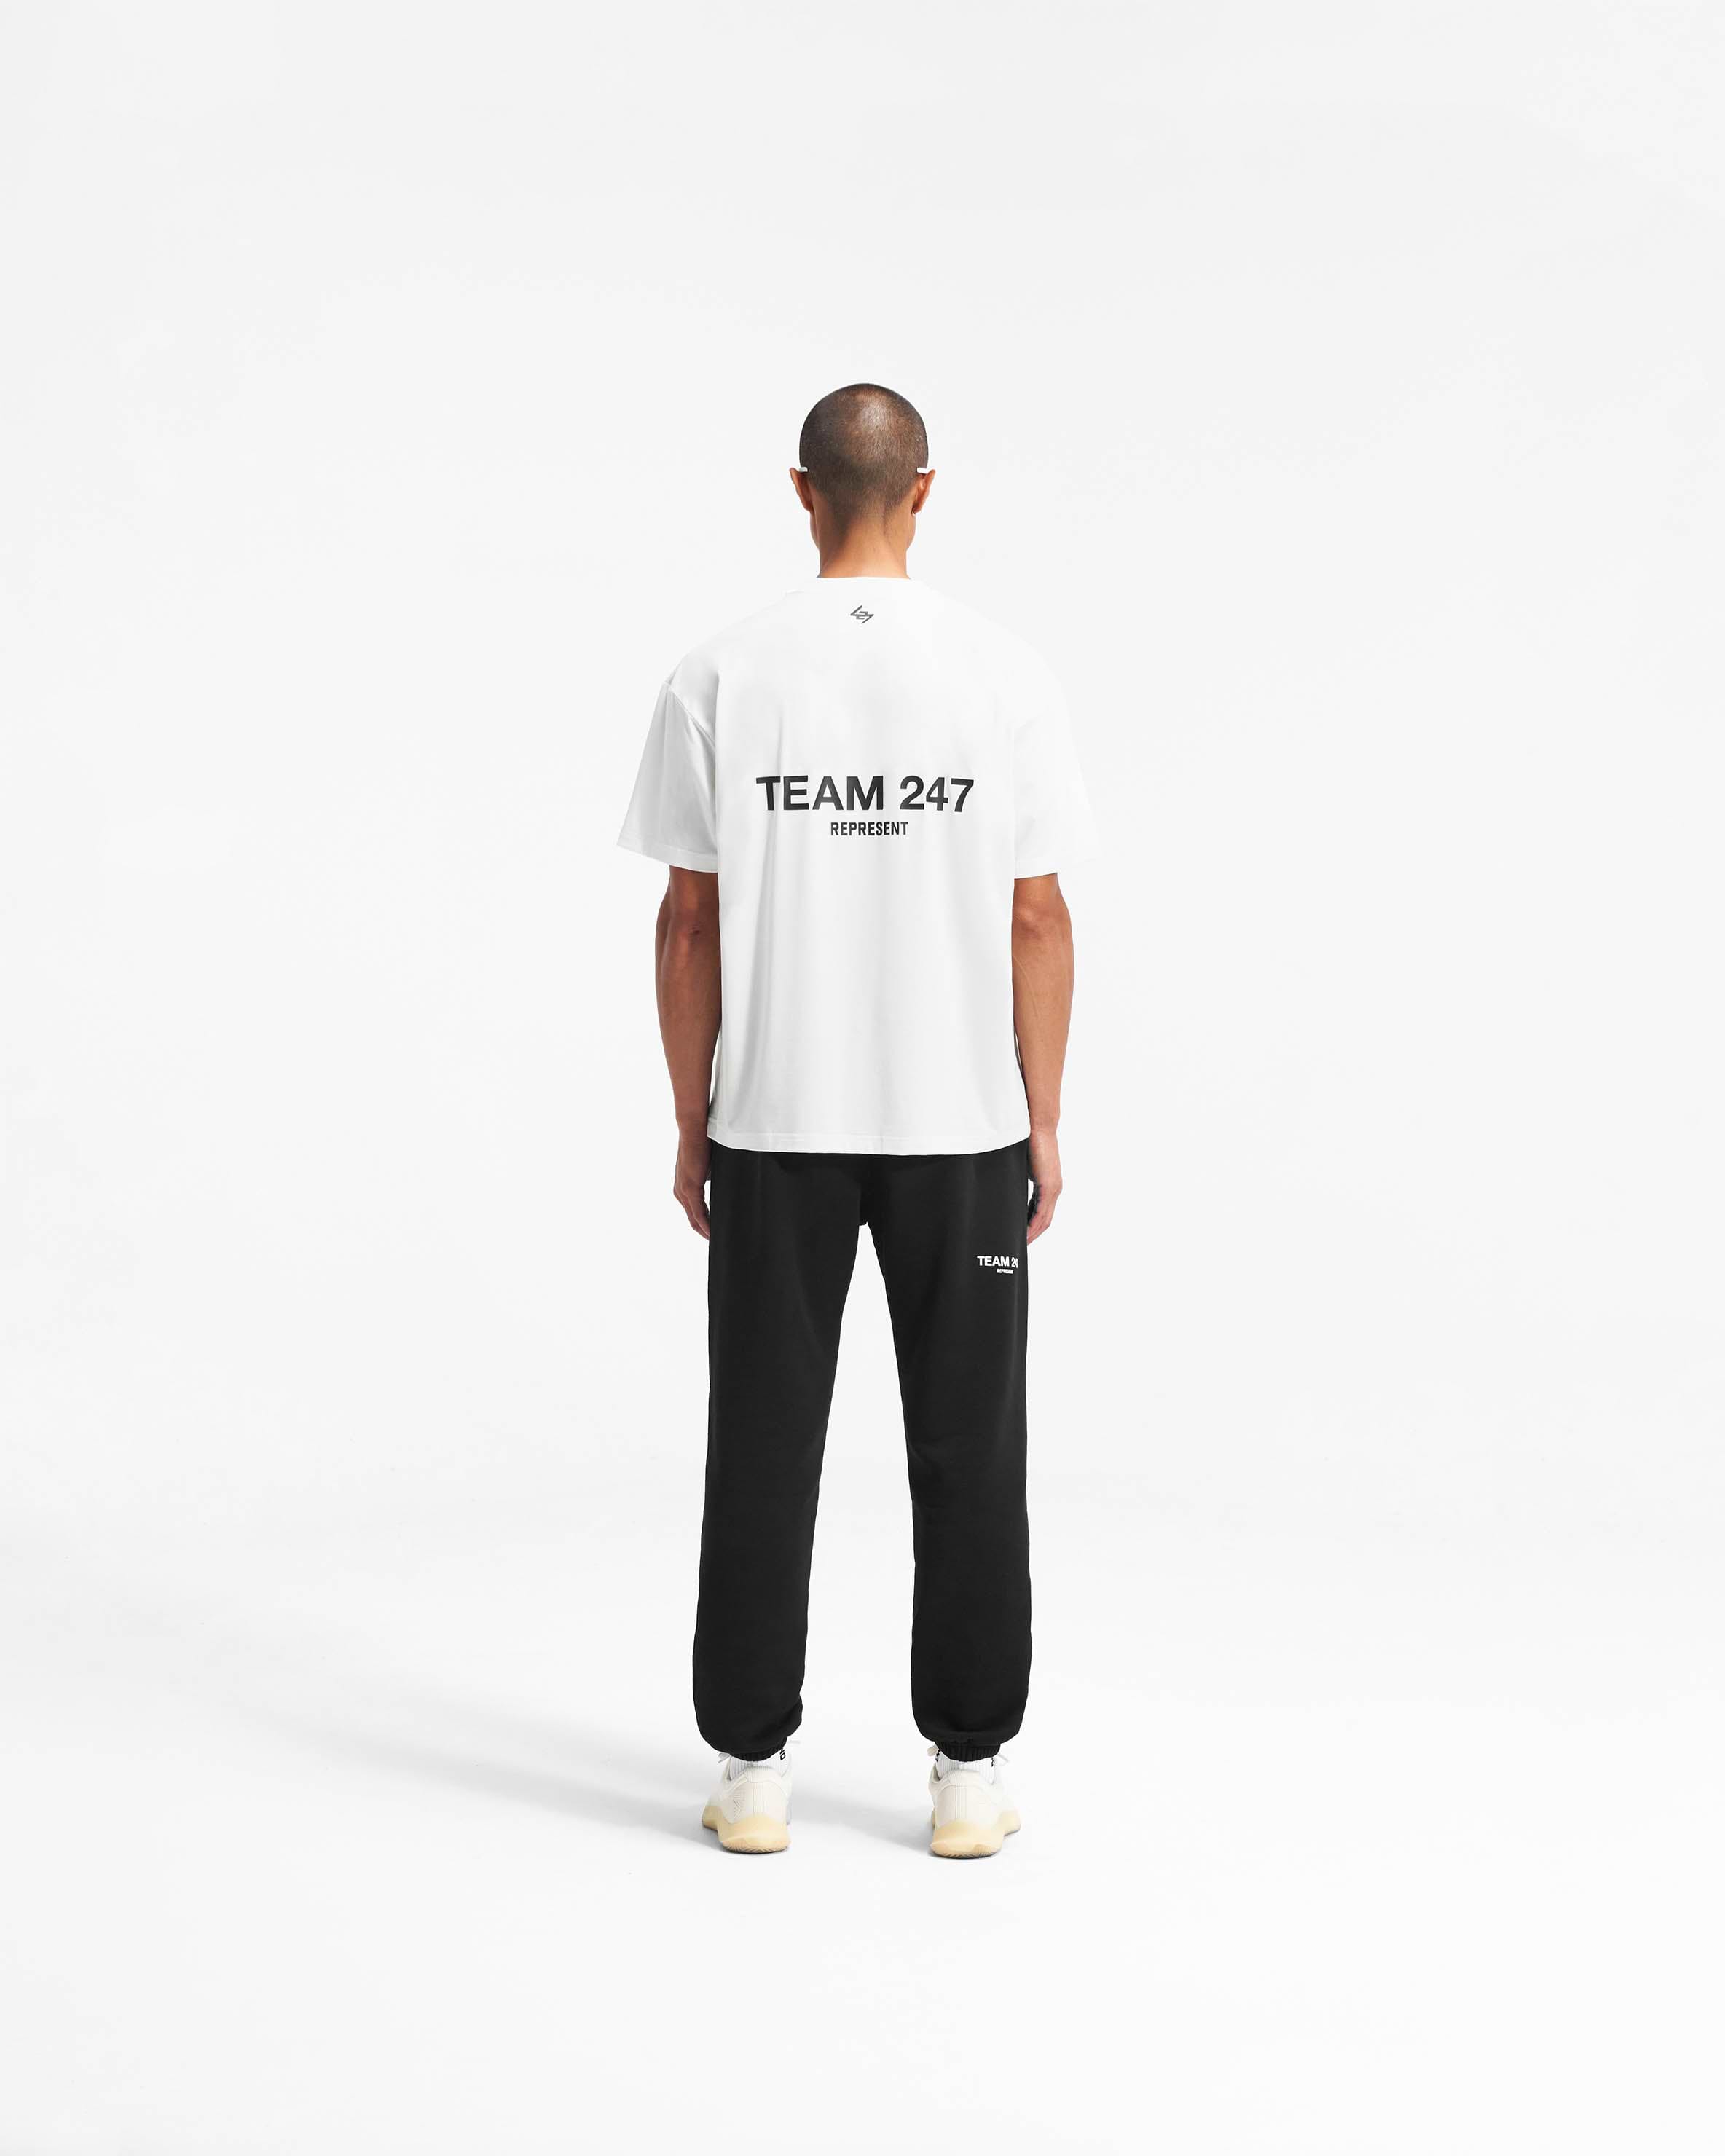 Team 247 Oversized T-Shirt | Flat White | REPRESENT CLO